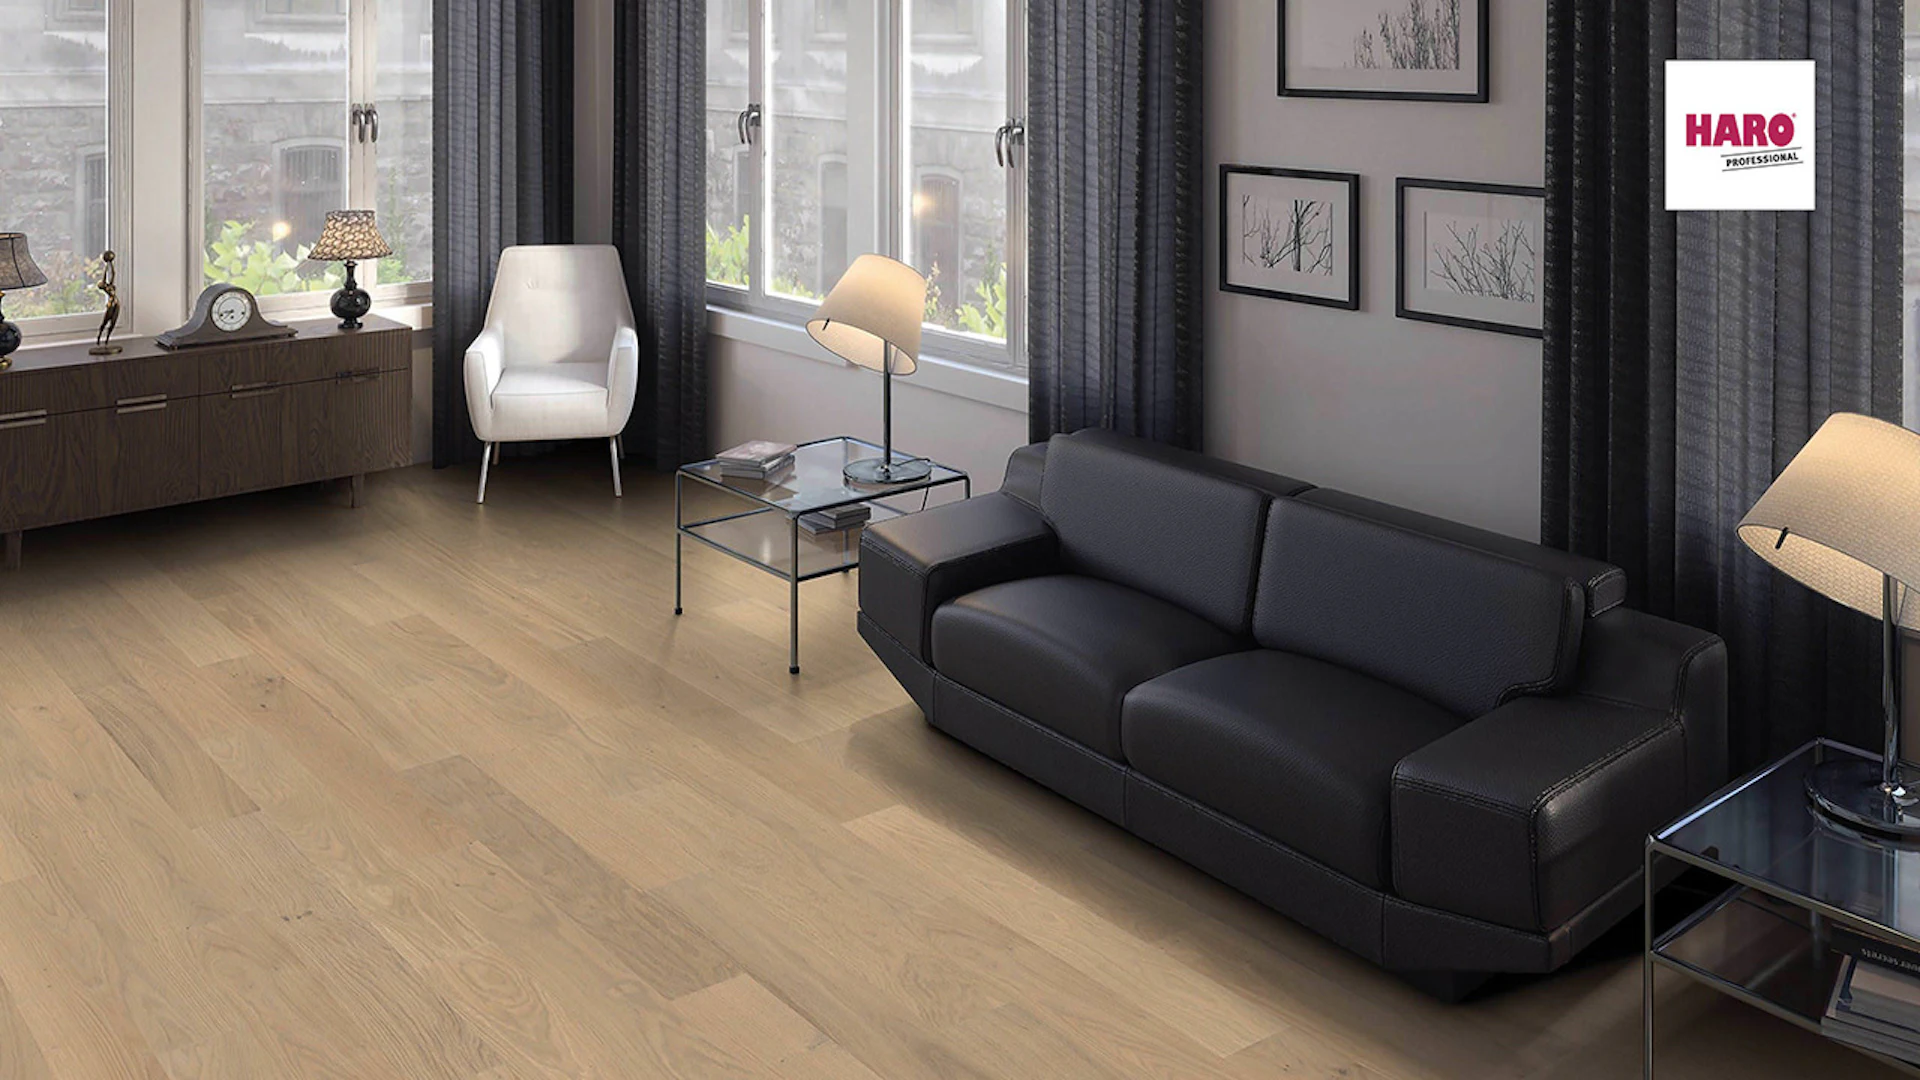 Haro Parquet Flooring - Series 4000 Stab Prestige naturaLin plus Oak sand gray Markant (540159)